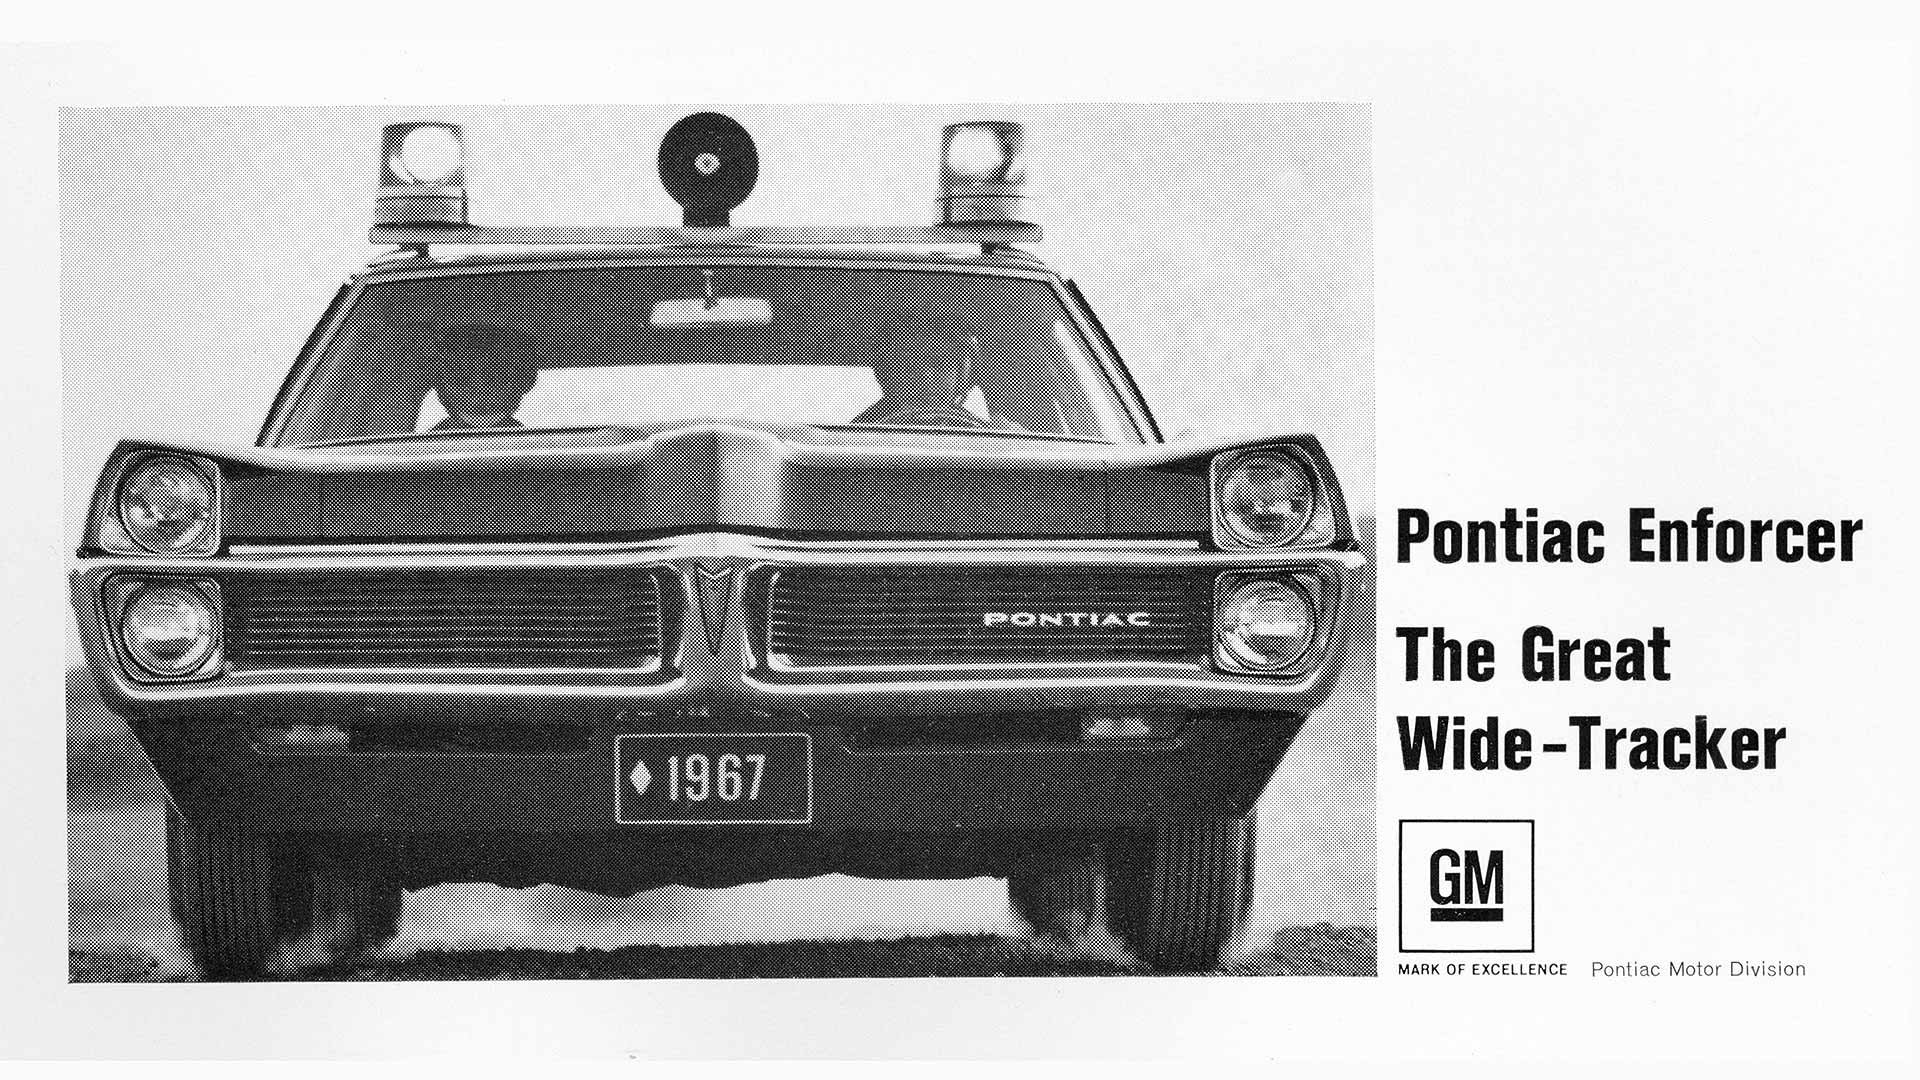 1967 Pontiac Enforcer 